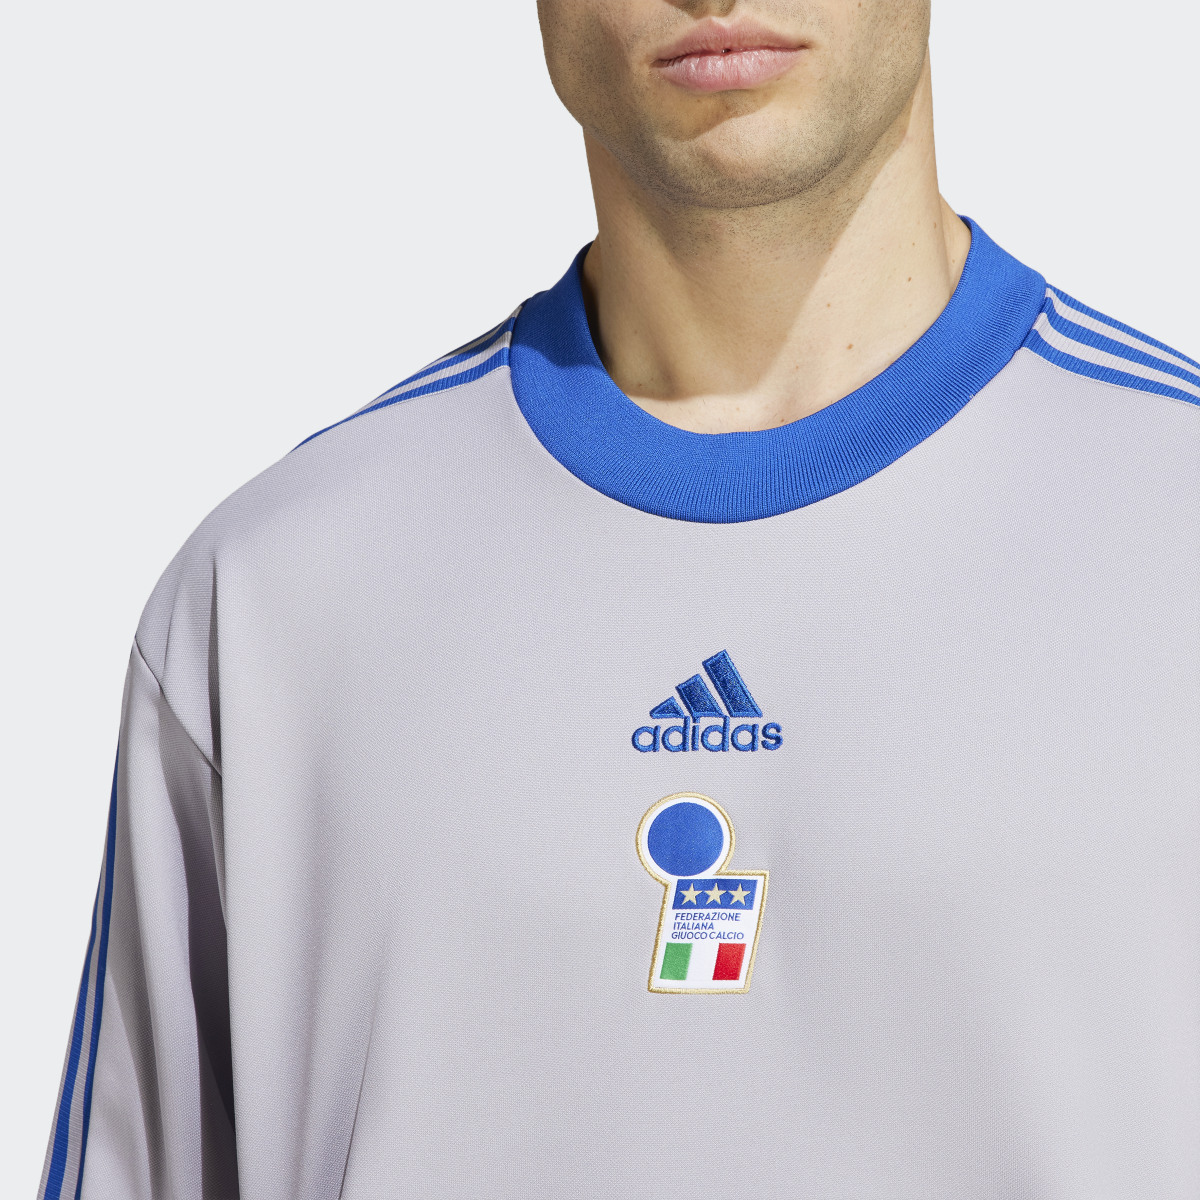 Adidas Italy Icon Goalkeeper Jersey. 8